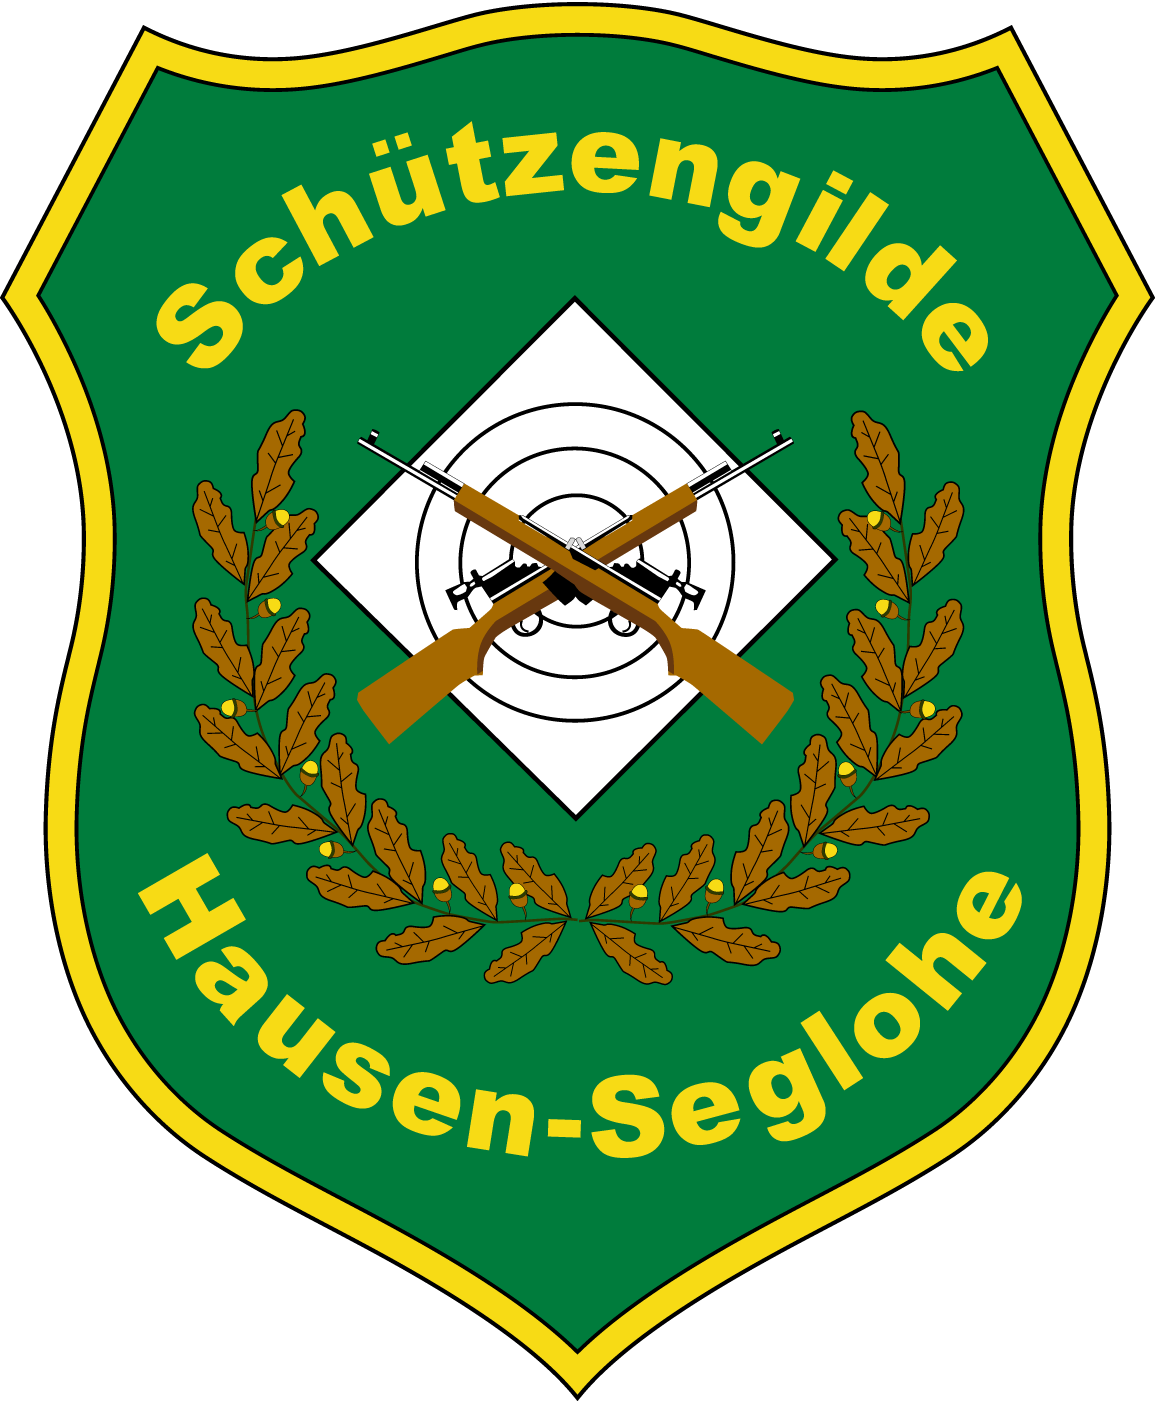 Schützengilde Hausen-Seglohe e.V.